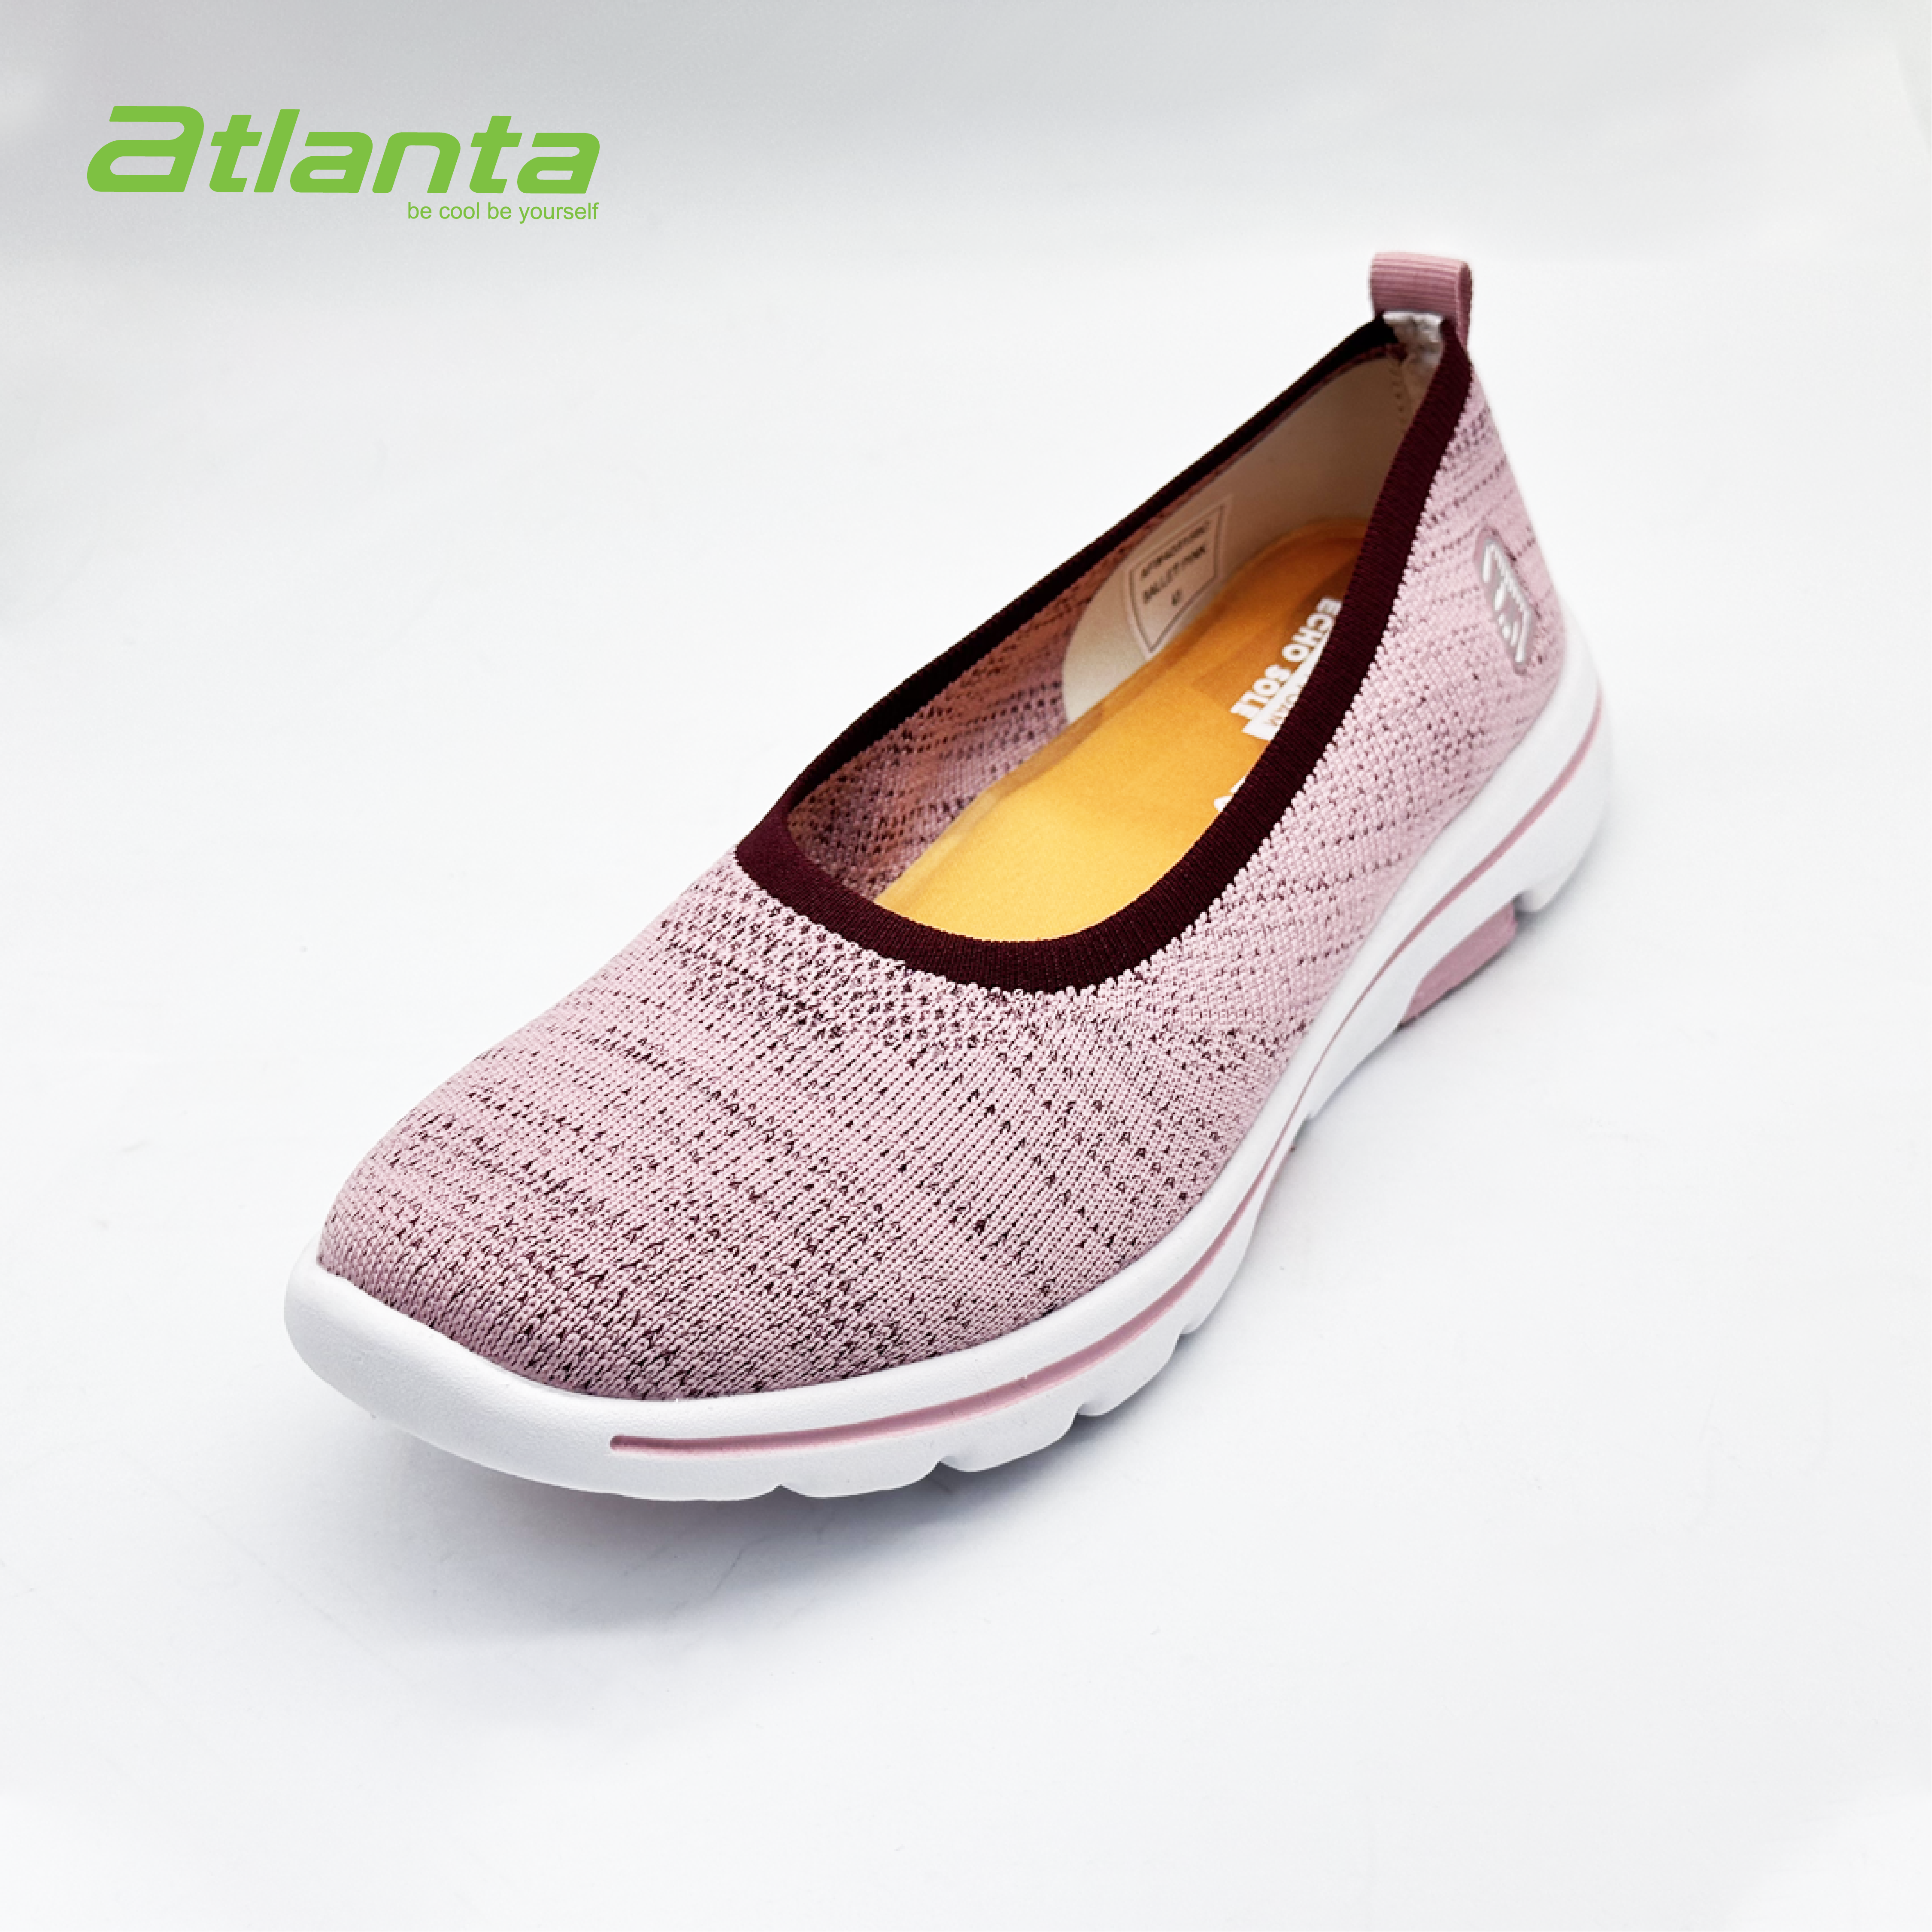 Atlanta Women Zero G3 Lifestyle Shoe | Ballet Pink